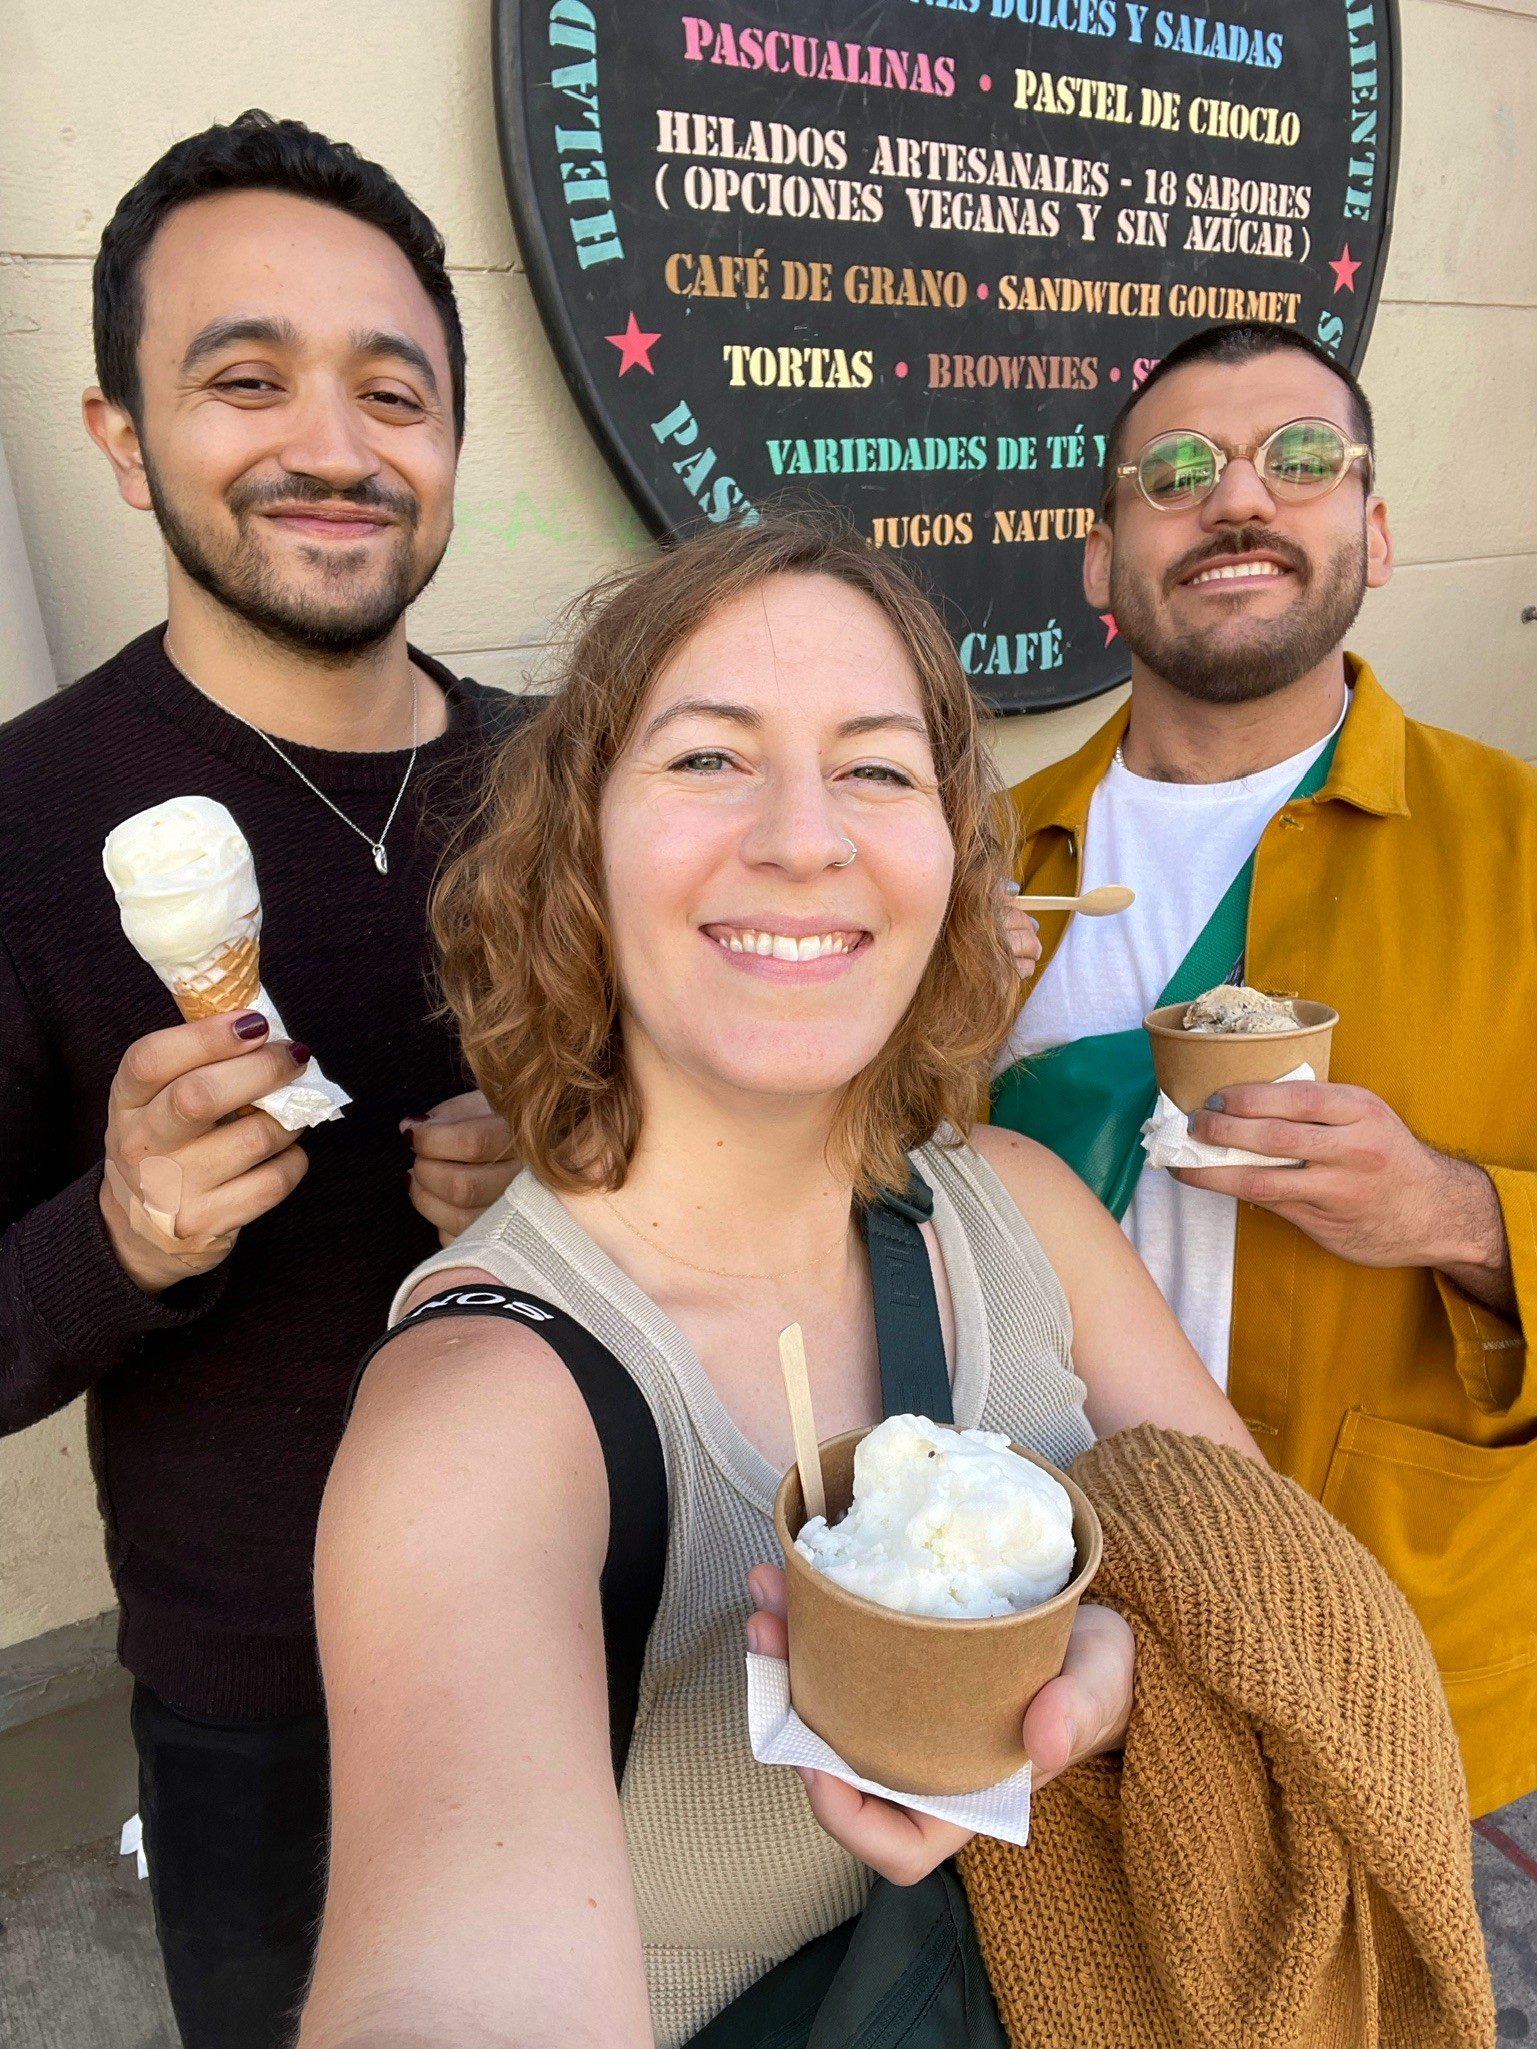 Fernando, Lauren and Esteban enjoying ice cream together